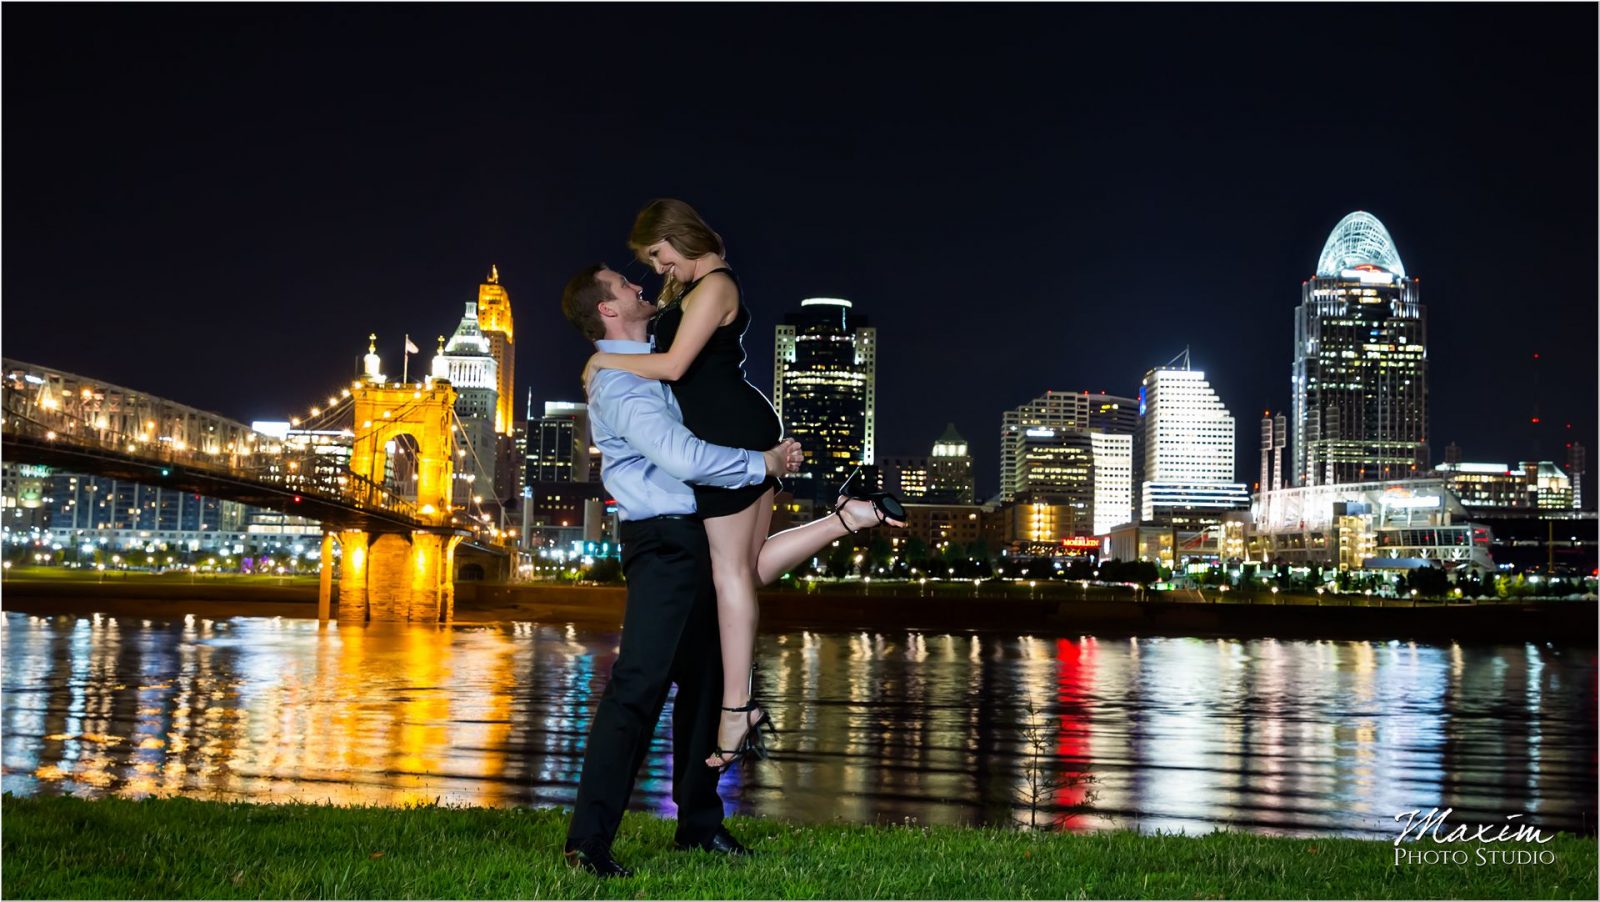 Ohio River Cincinnati skyline night engagement